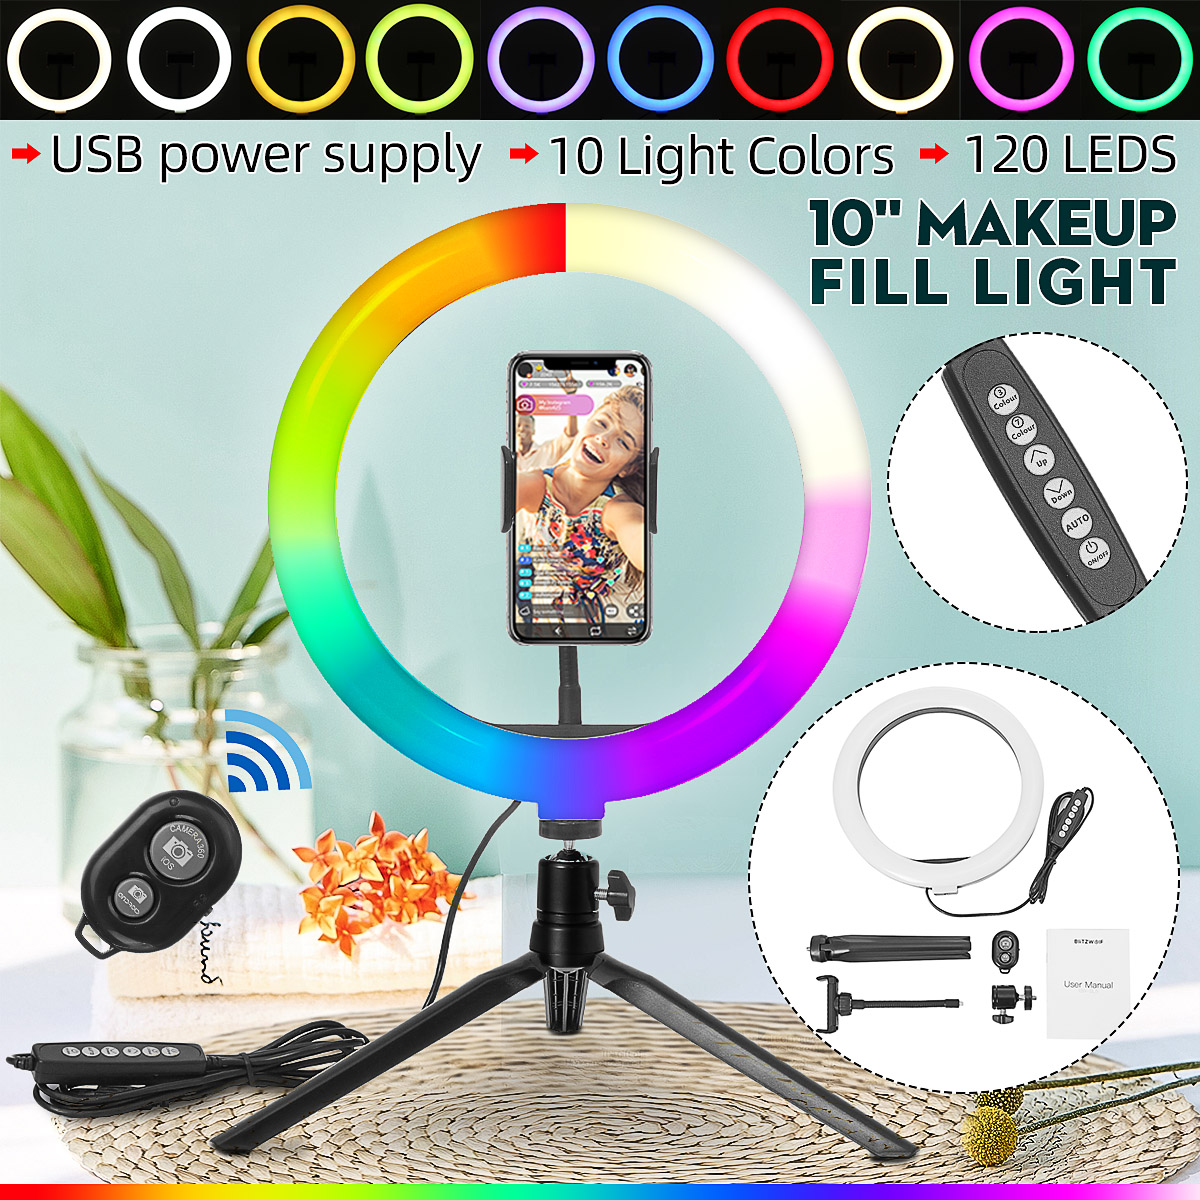 102-inch-Diameter-10-Brightness-RGB-LED-Makeup-Fill-Light-Selfie-Ring-Lamp-Phone-Holder-Tripod-Stand-1788455-1